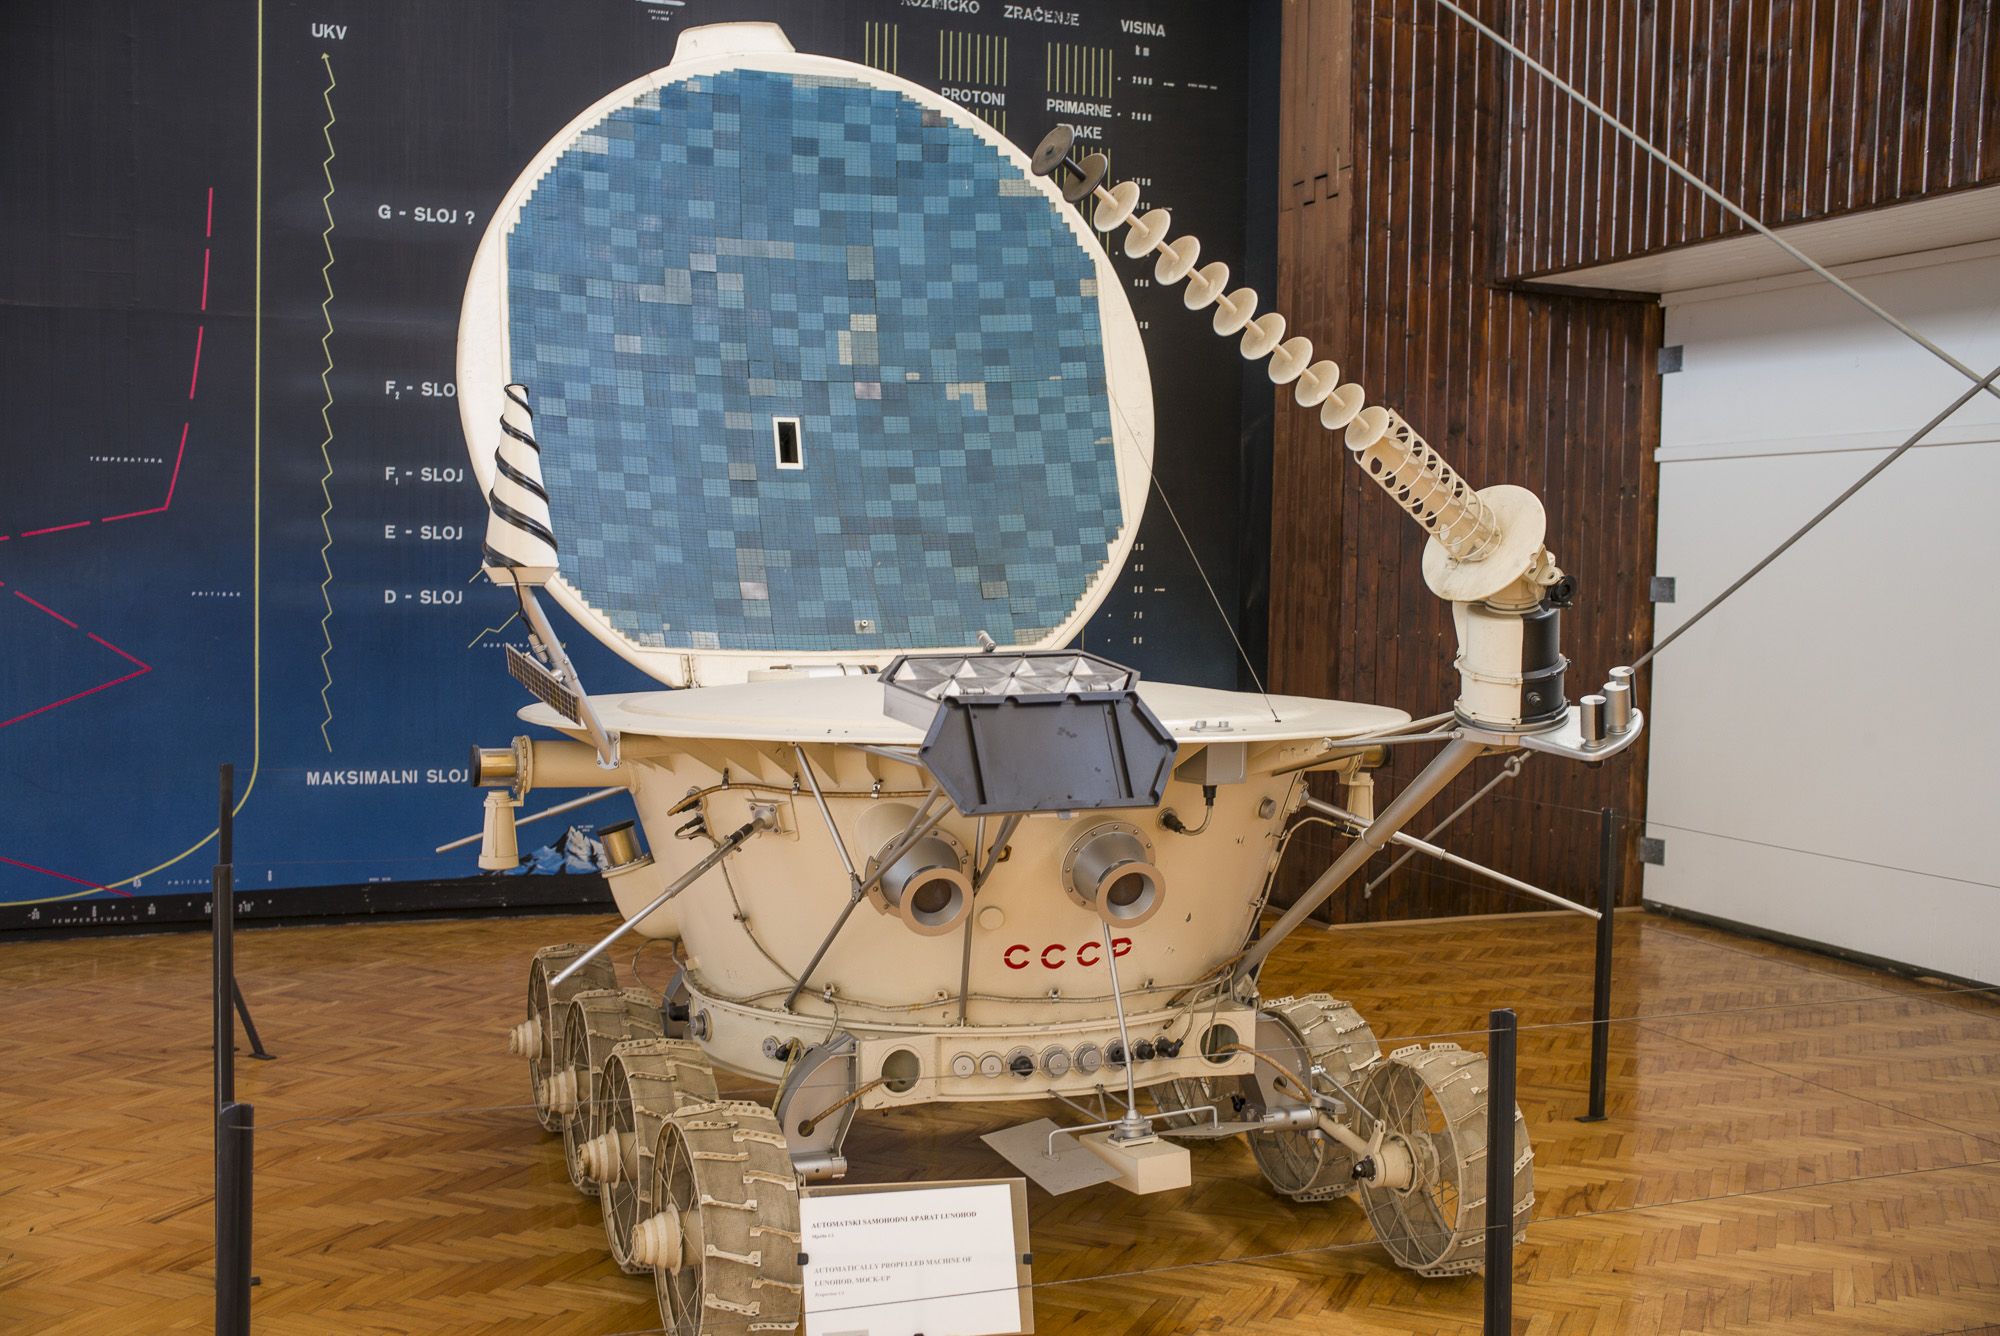 Soviet Lunar Rover